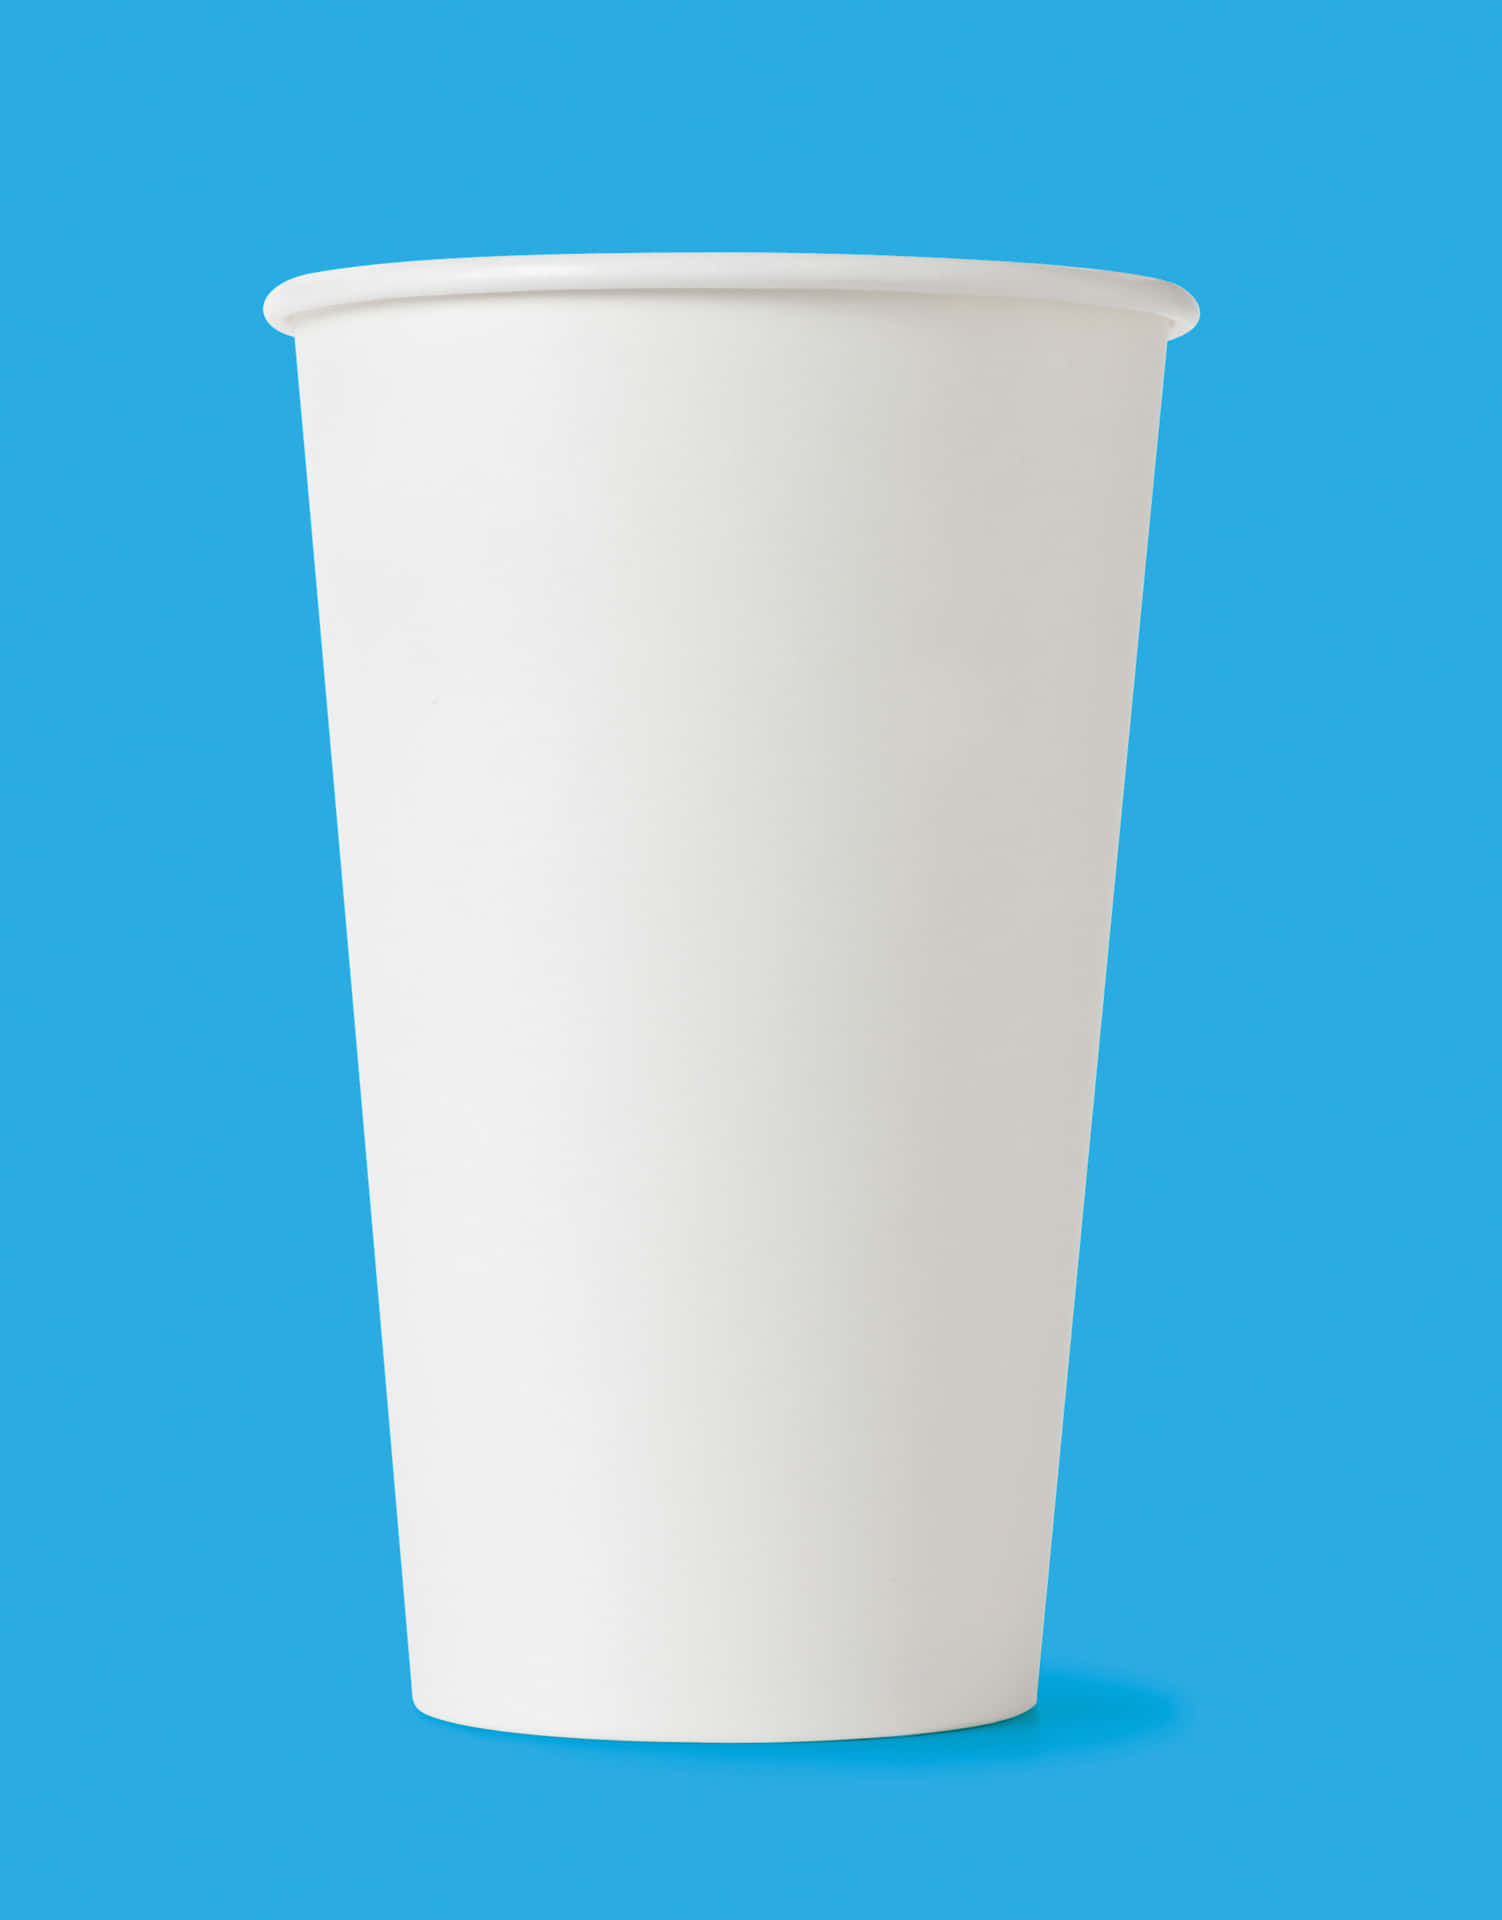 Plain White Disposable Cup Wallpaper